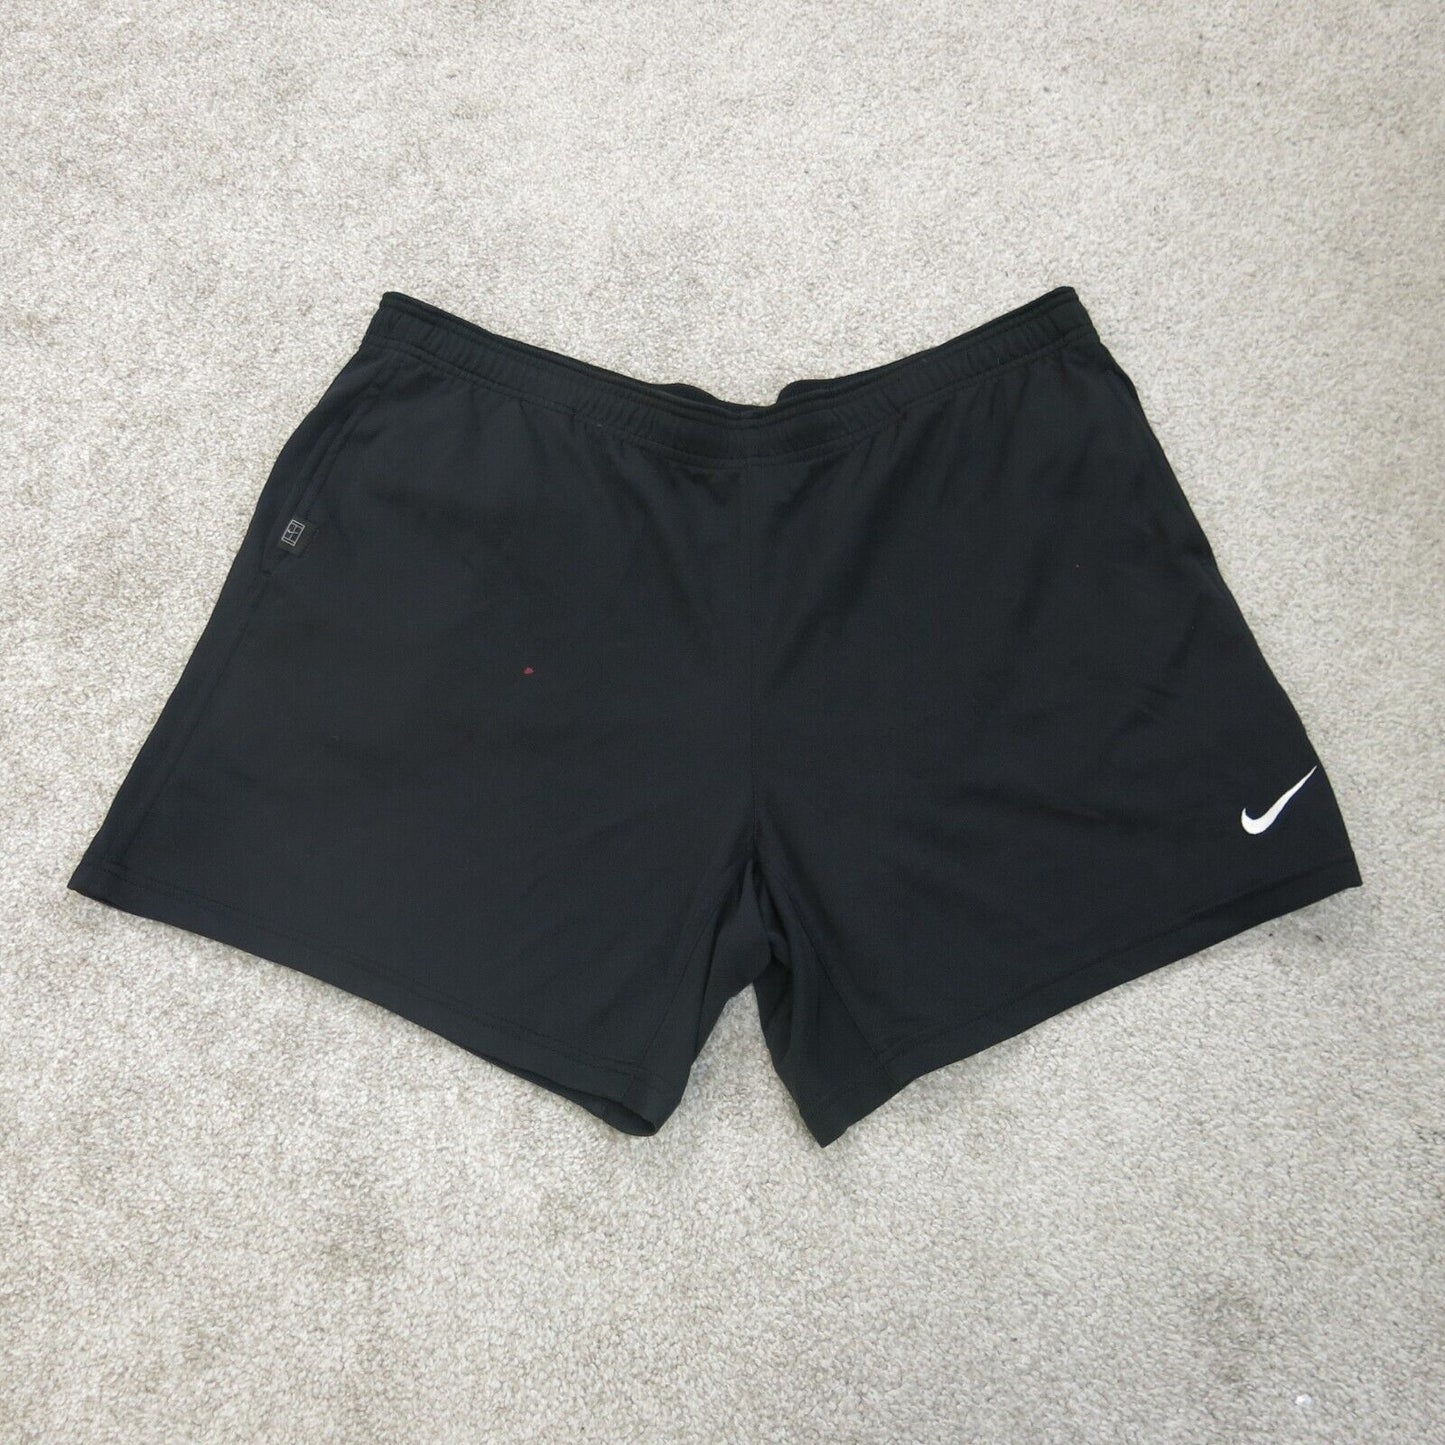 Nike Shorts Mens X Large Black Stretch Athletic Running & Jogging Dri Fit Logo